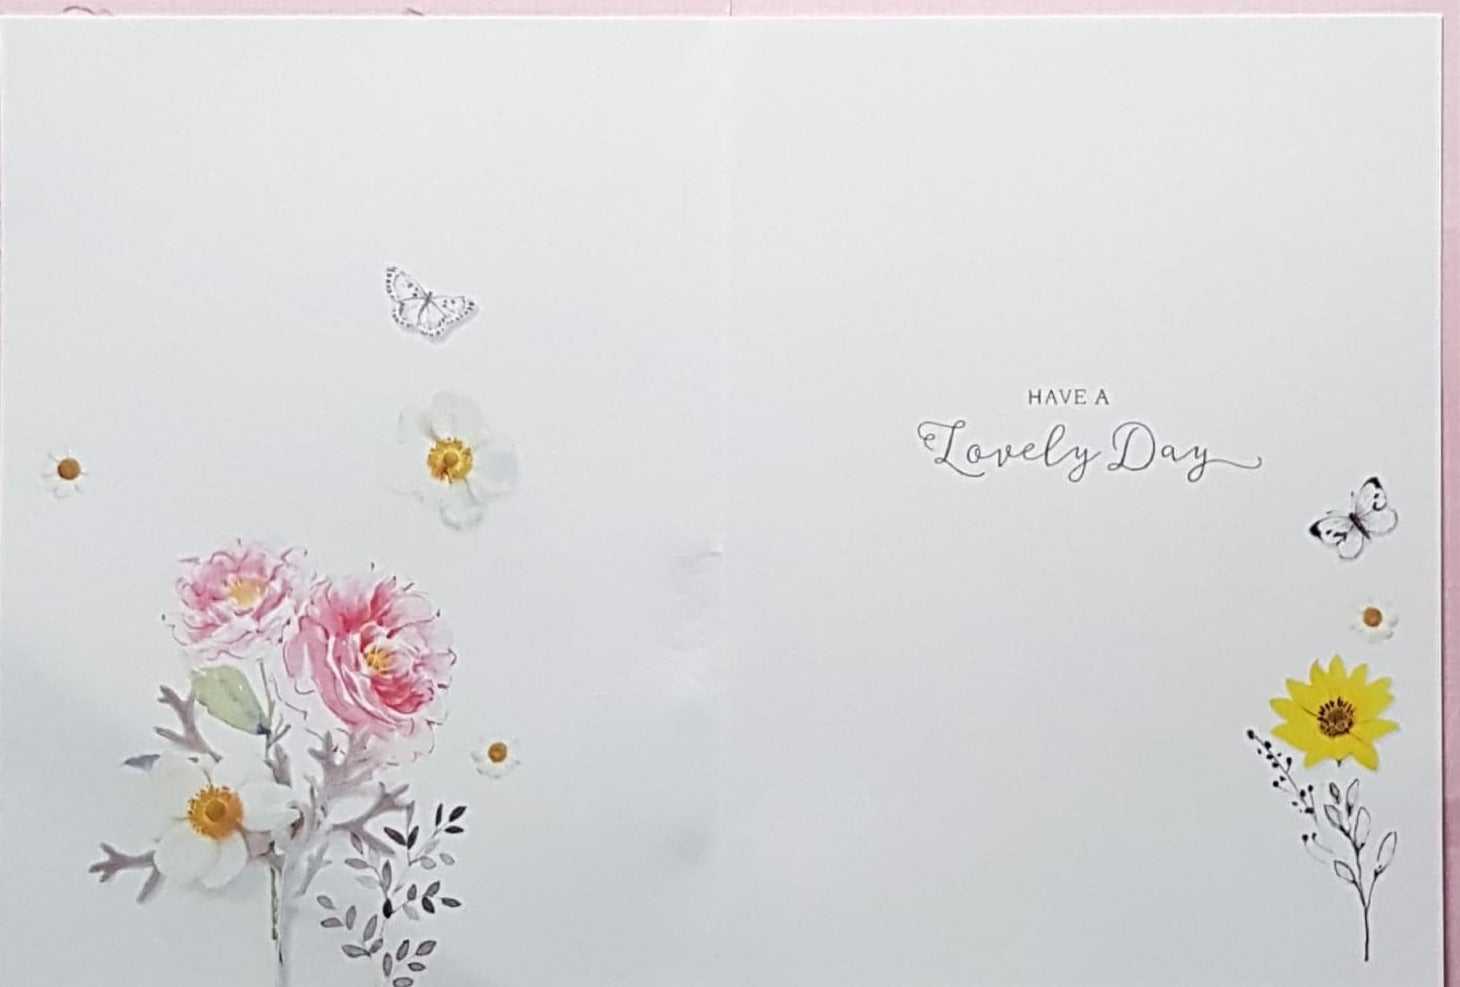 Birthday Card - On Your Birthday / Colourful Floral Border